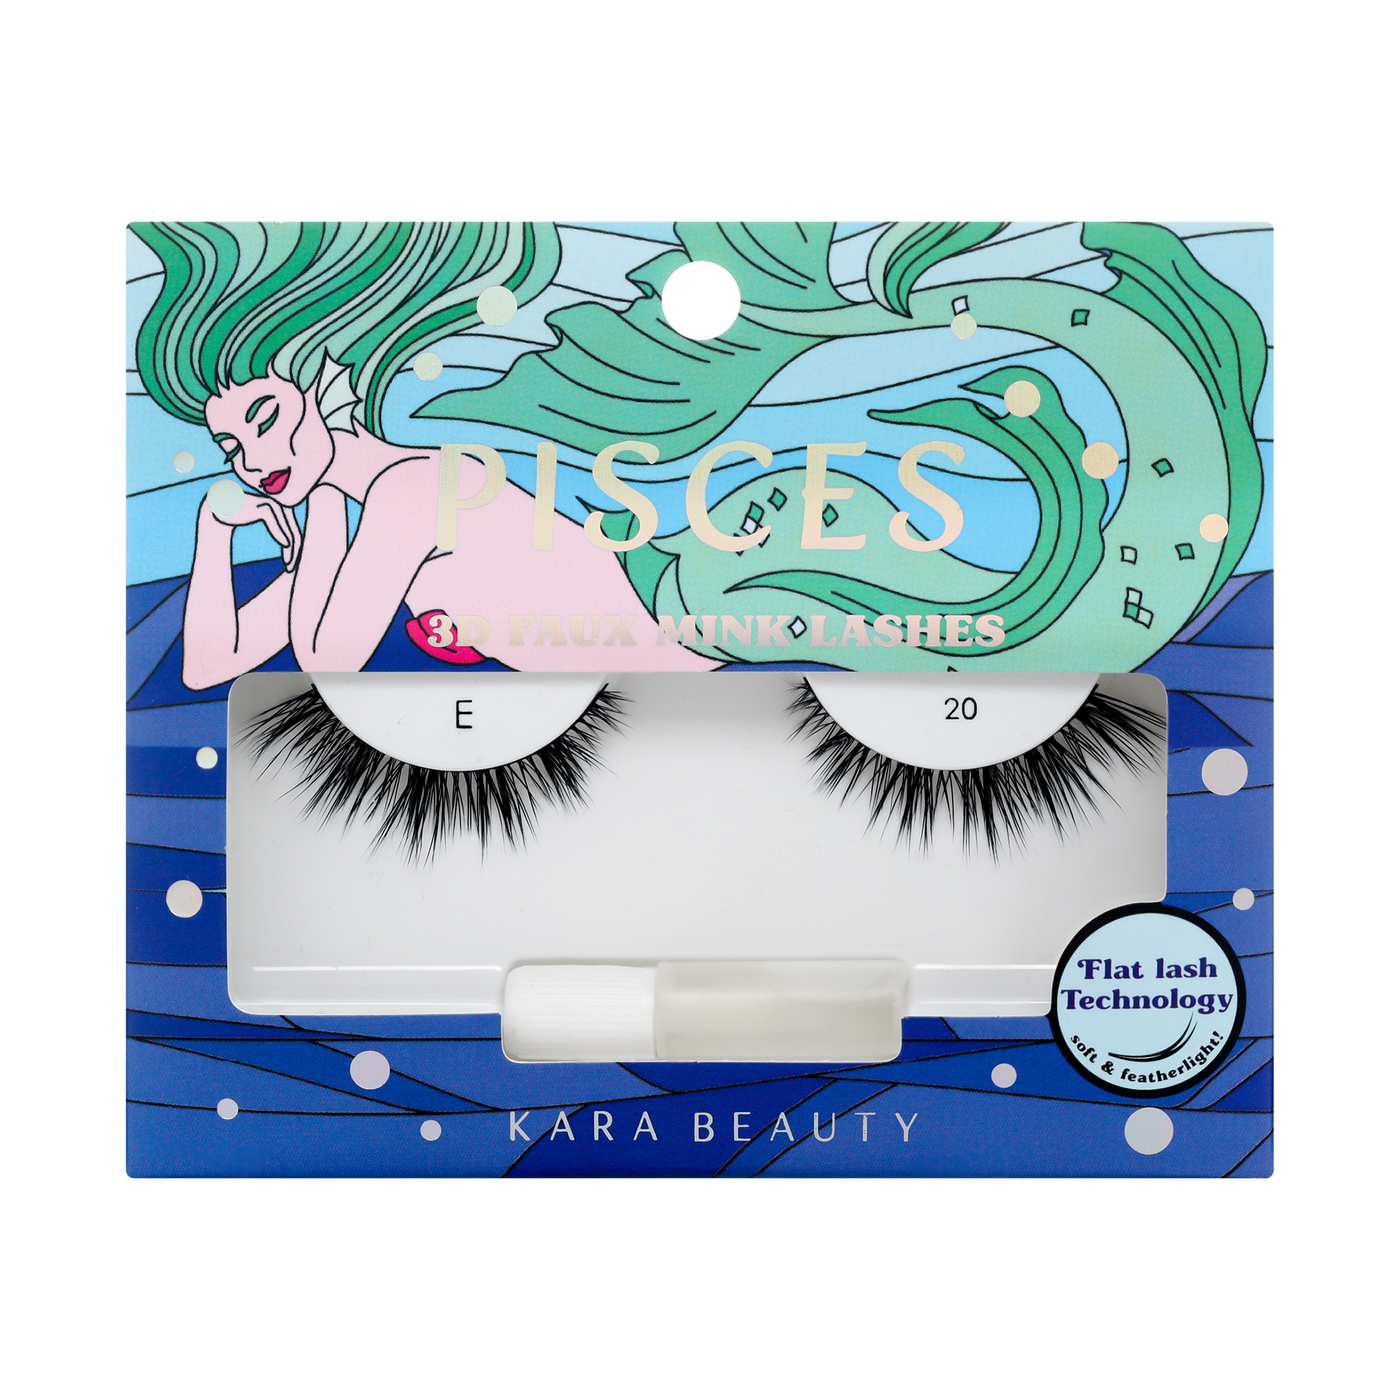 Kara Beauty's Zodiac Pisces 3D Faux Mink Flat (Cashmere) False Eyelashes